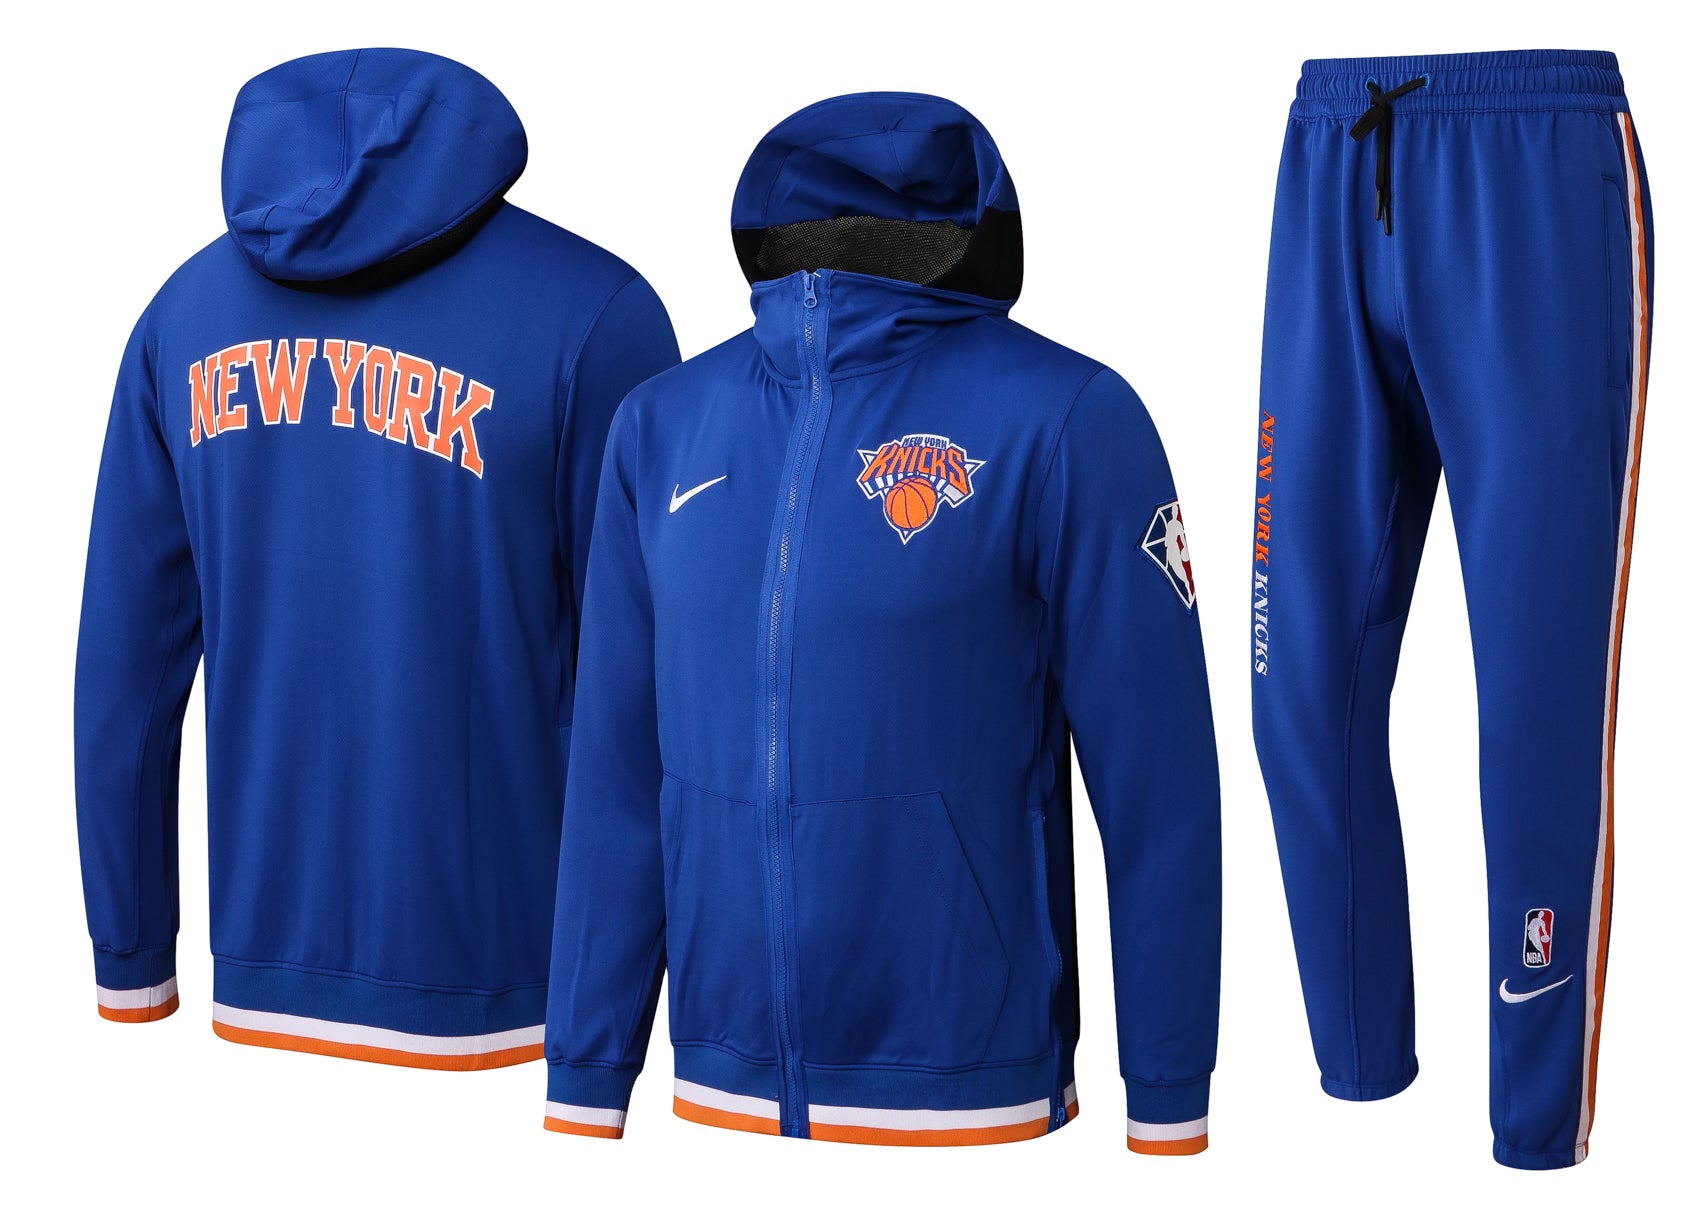 New York blue suit